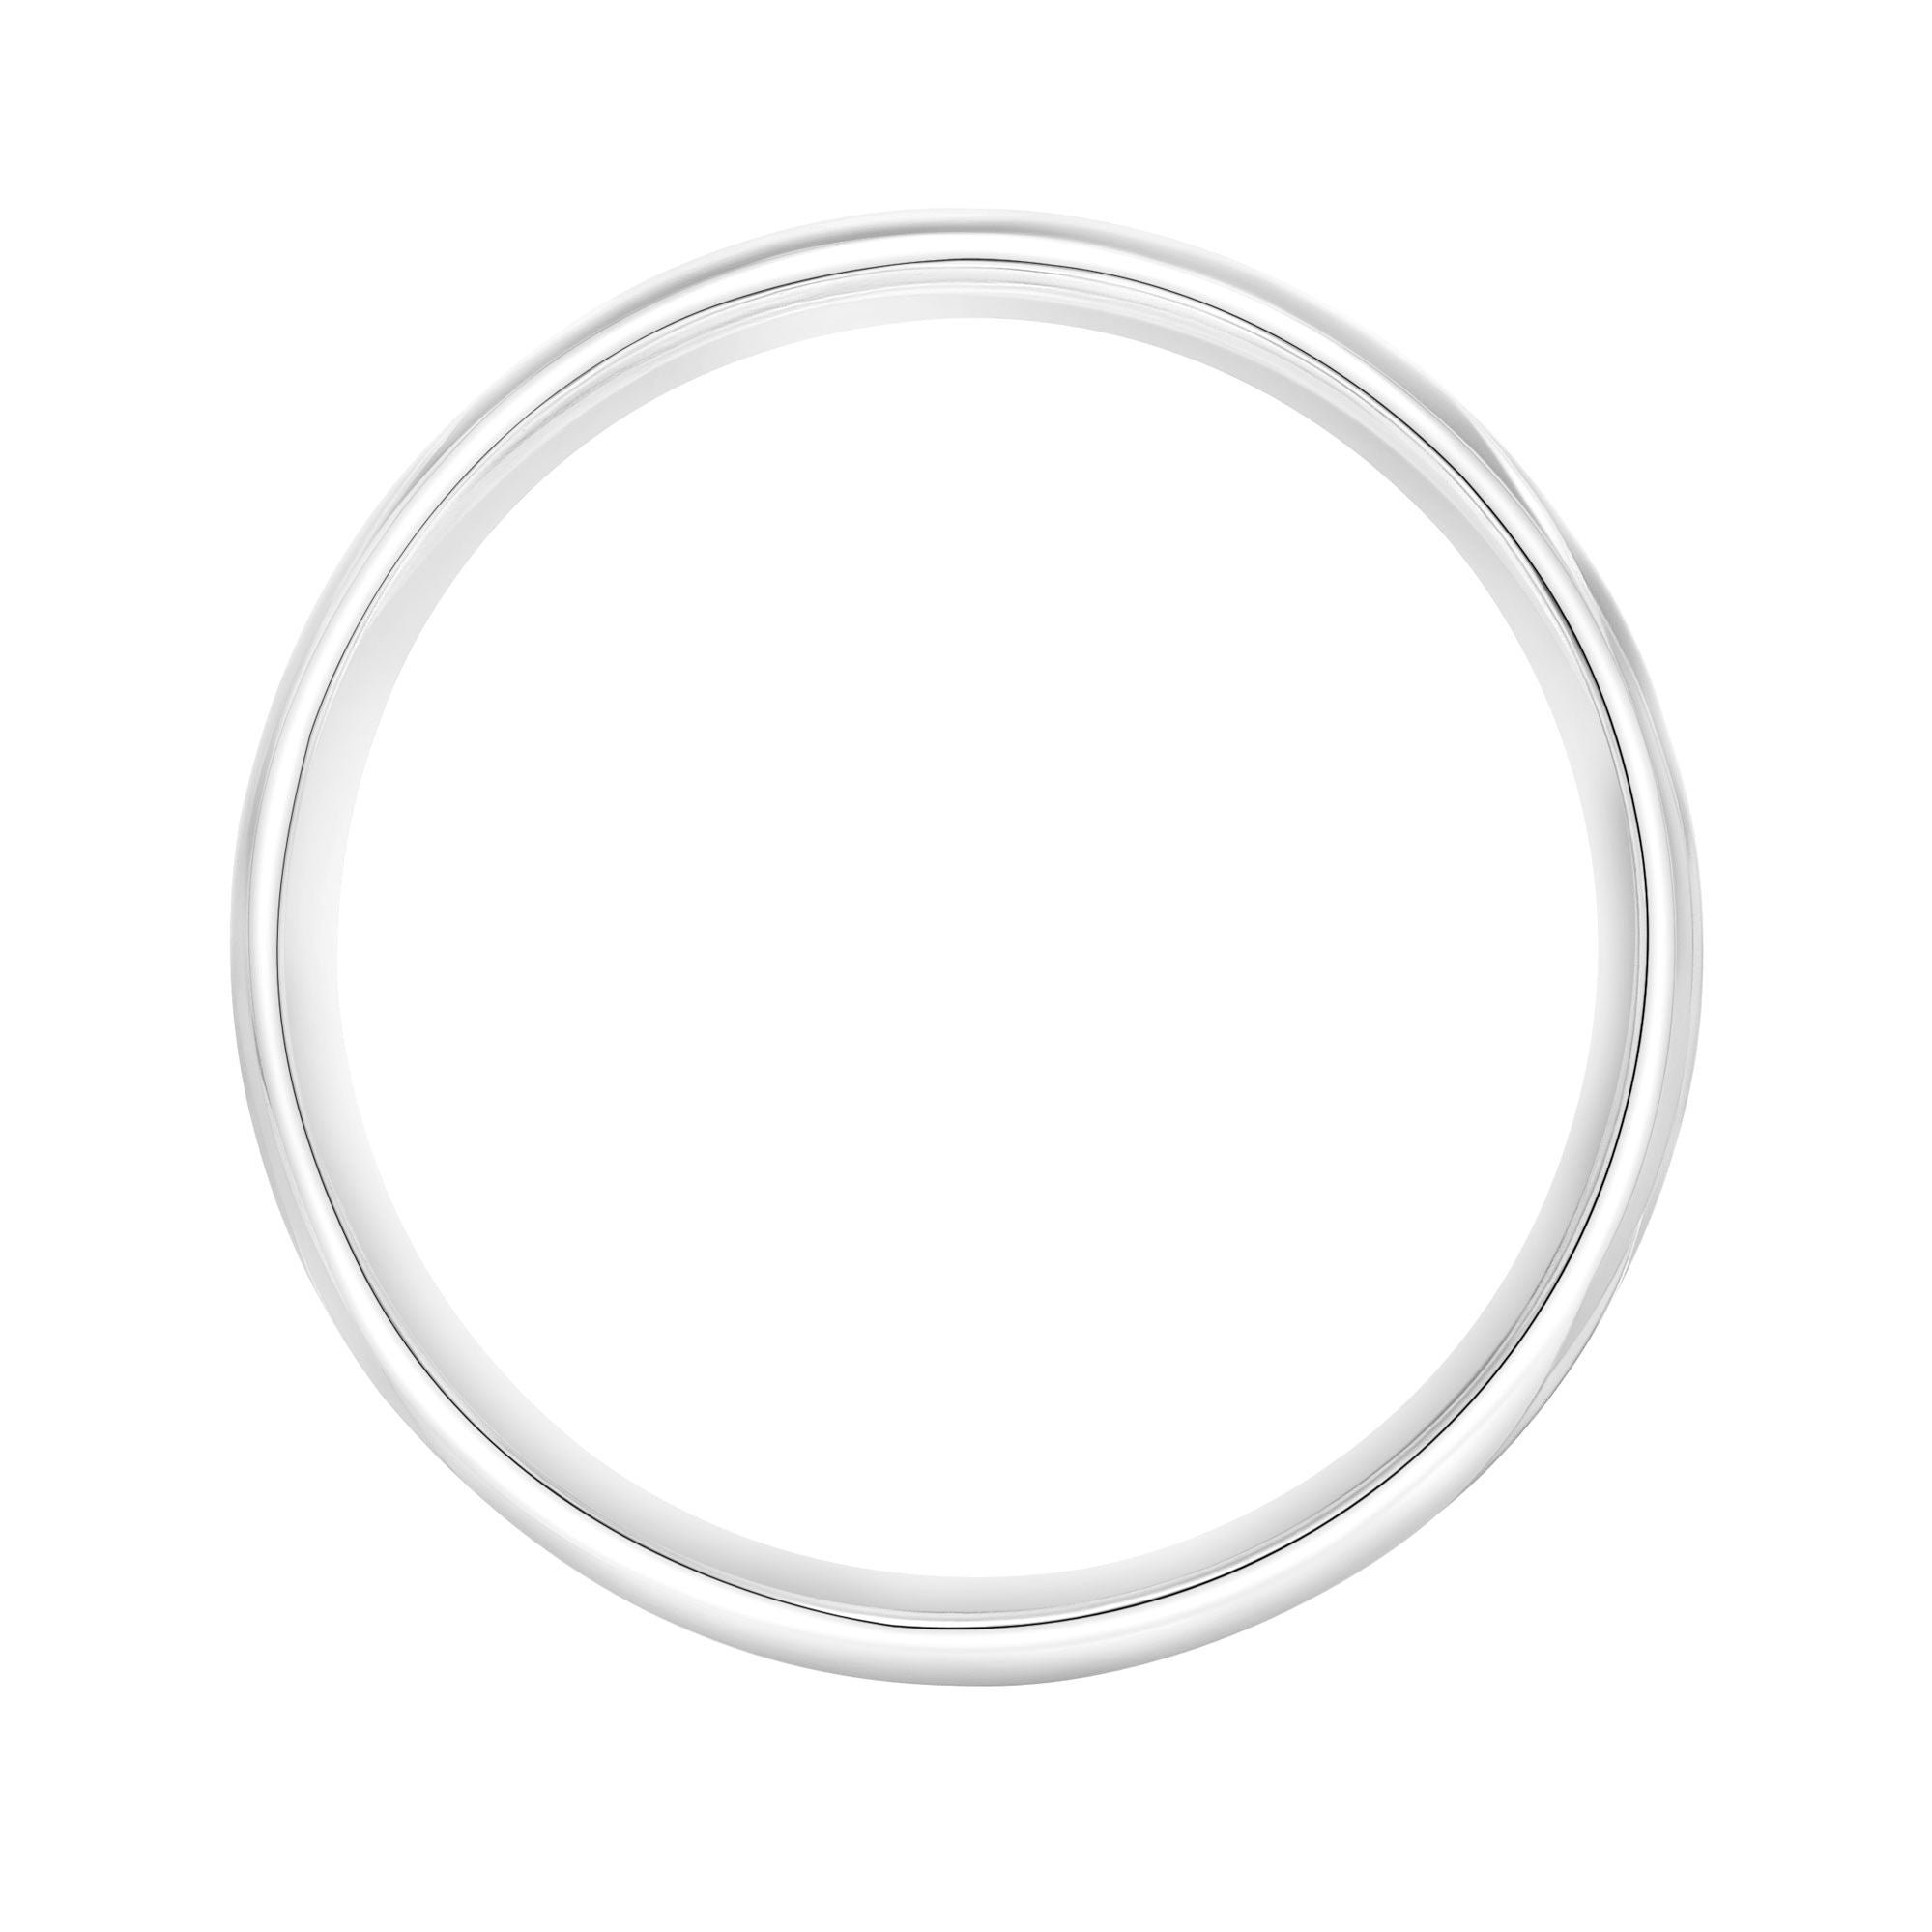 Roux 5mm Light Low Dome Platinum Wedding Ring